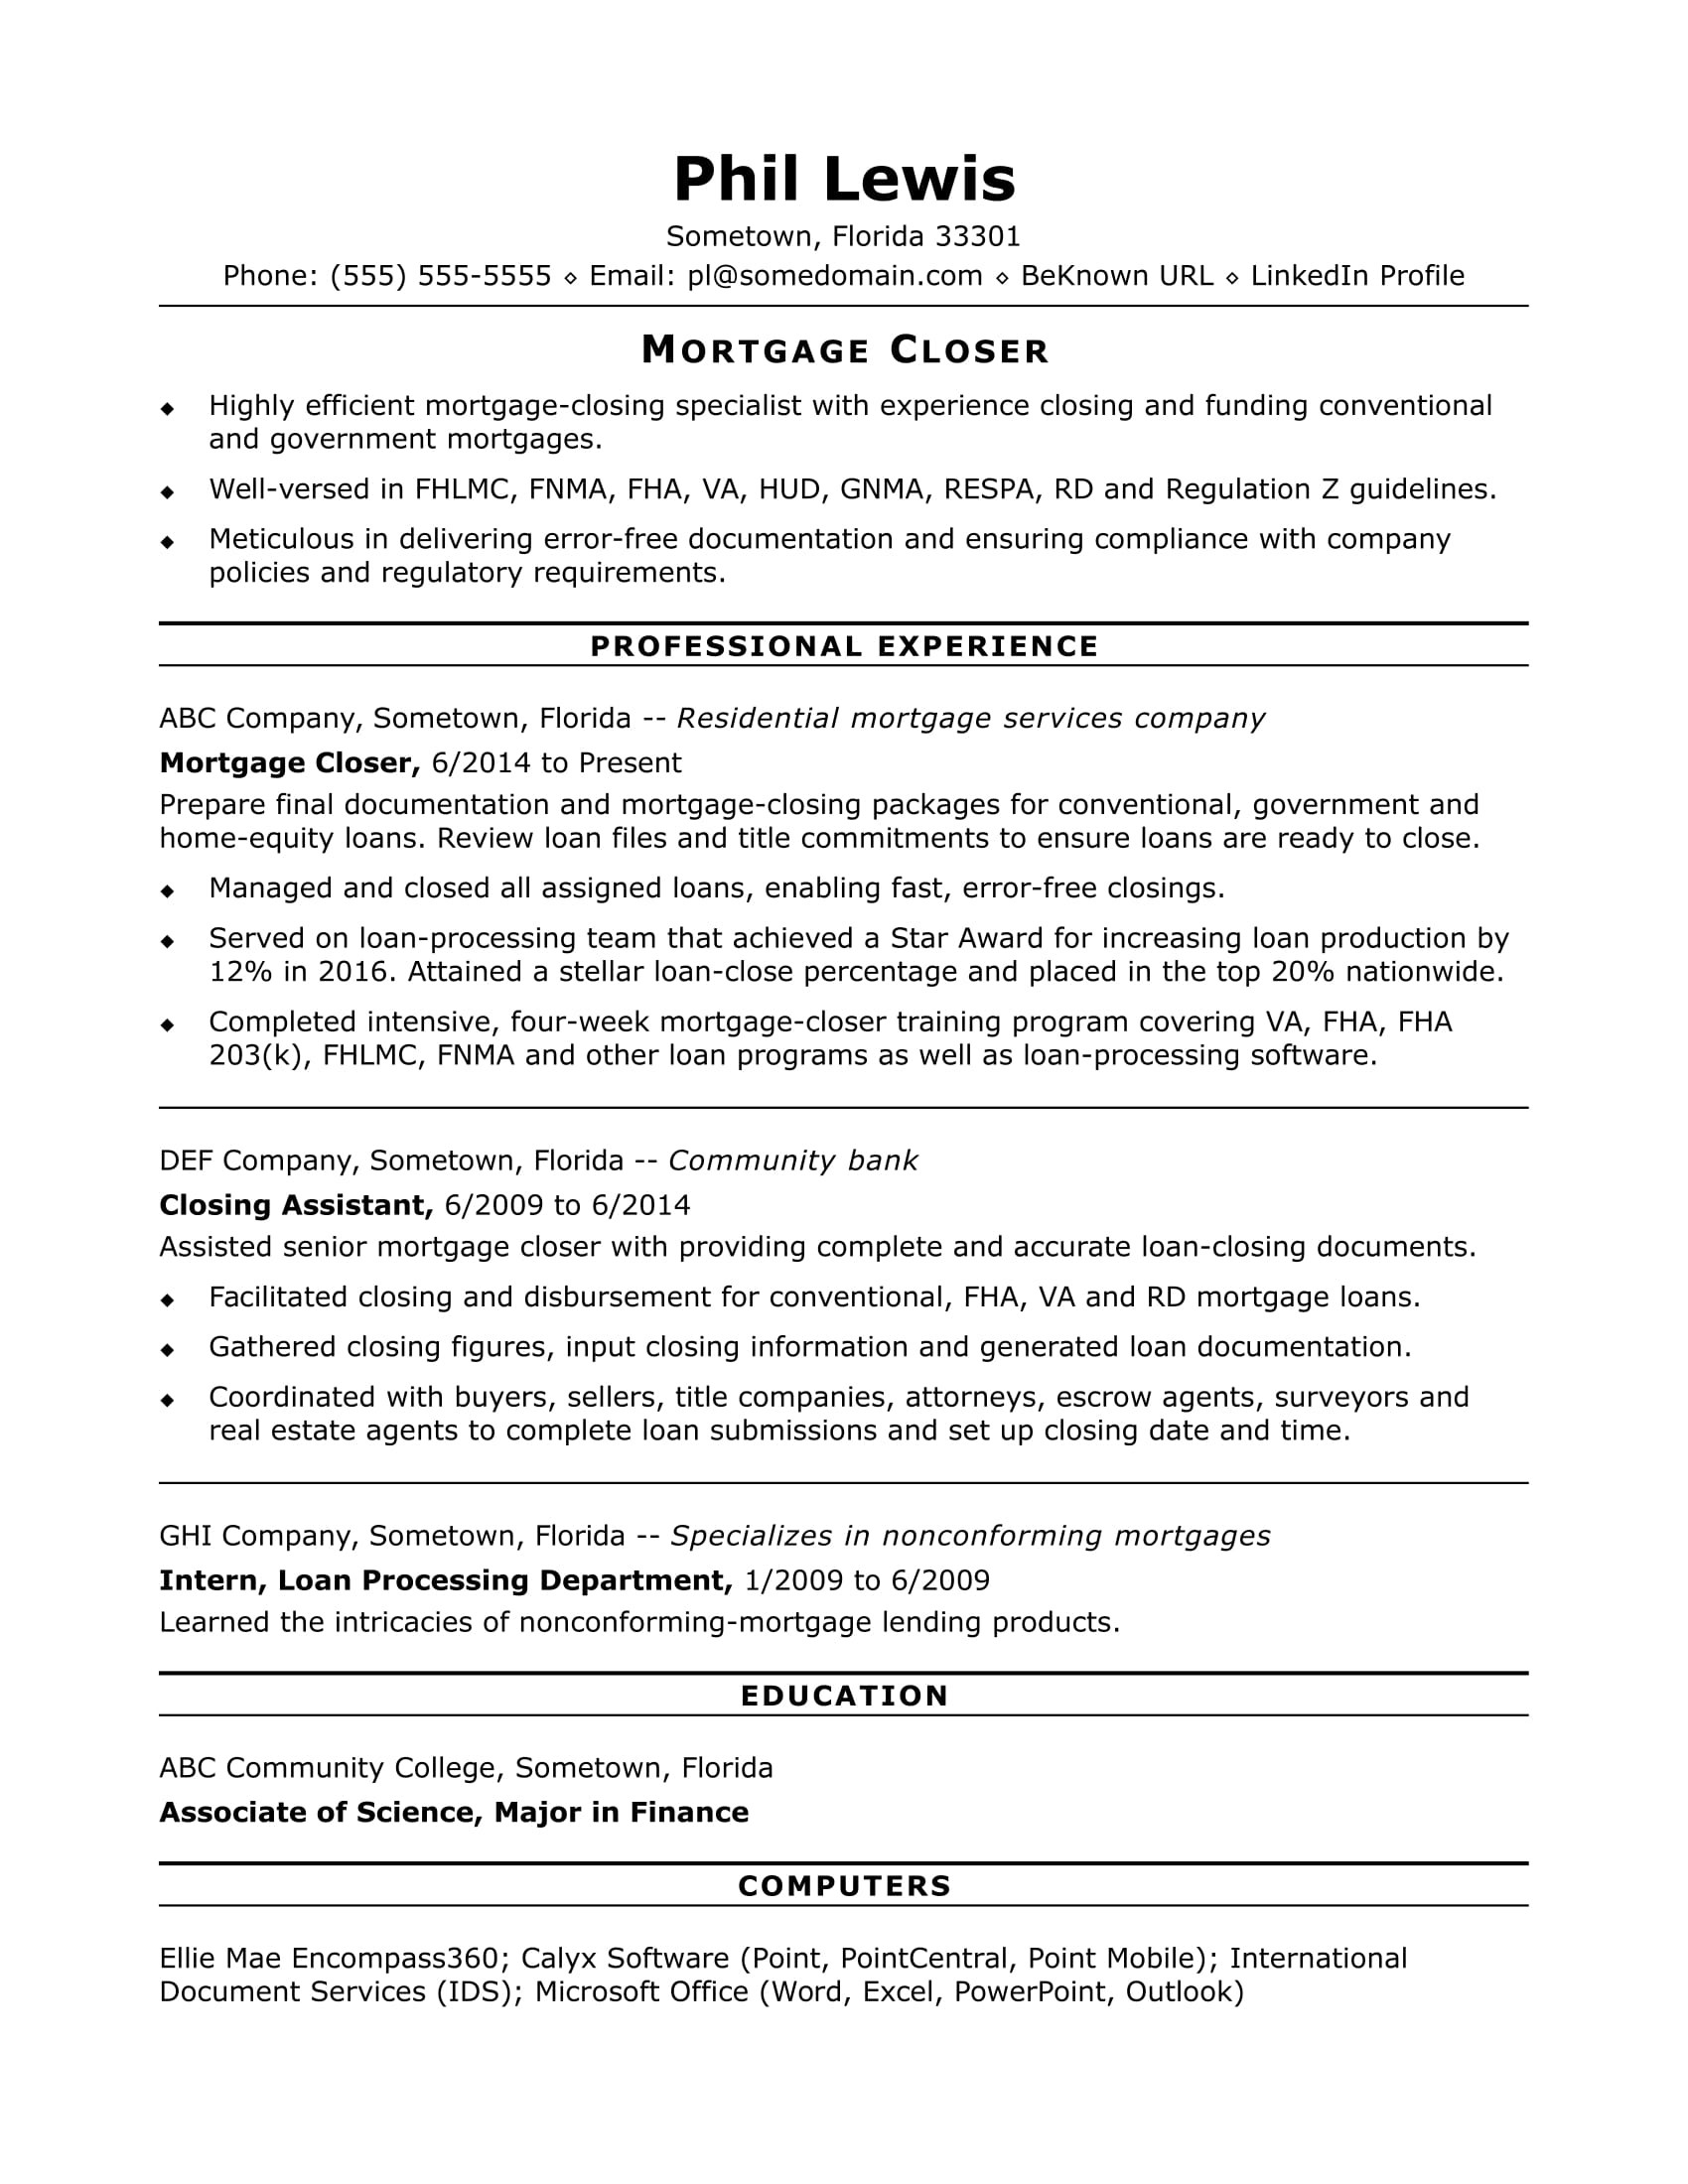 Sample Resume for Us Mortgage Underwriter Mortgage Closer Resume Sample Monster.com